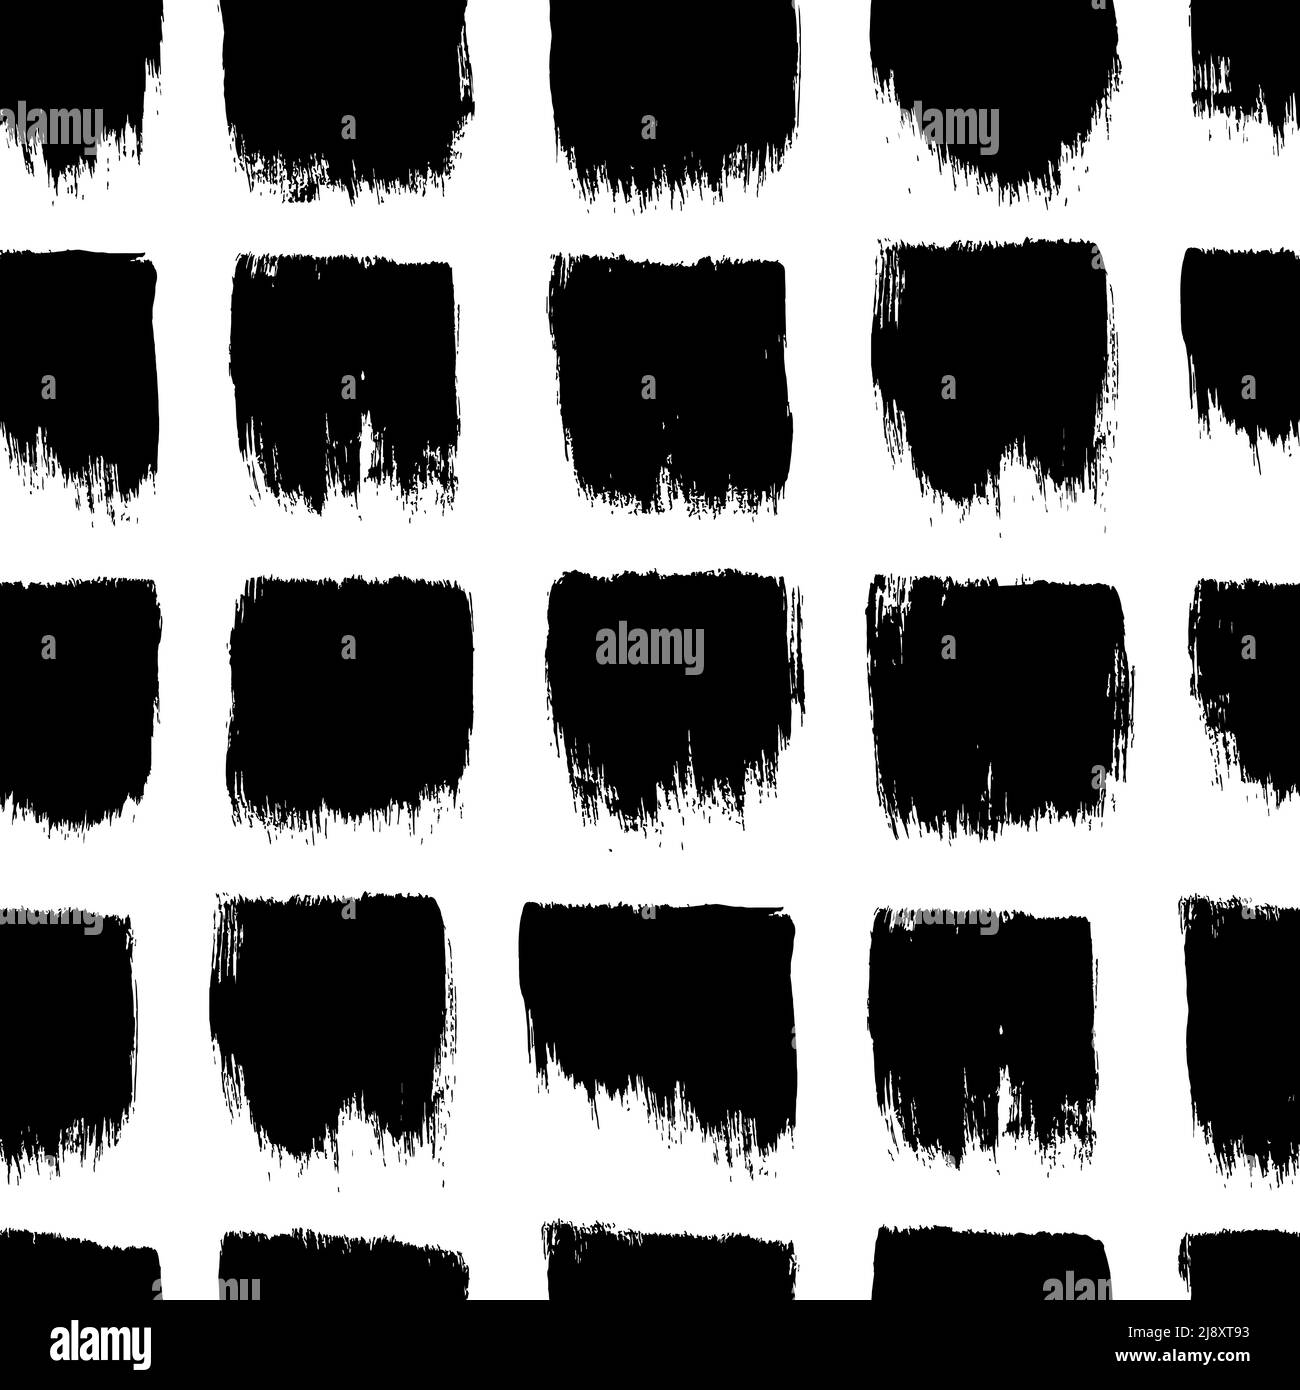 Schwarze quadrate -Fotos und -Bildmaterial in hoher Auflösung – Alamy